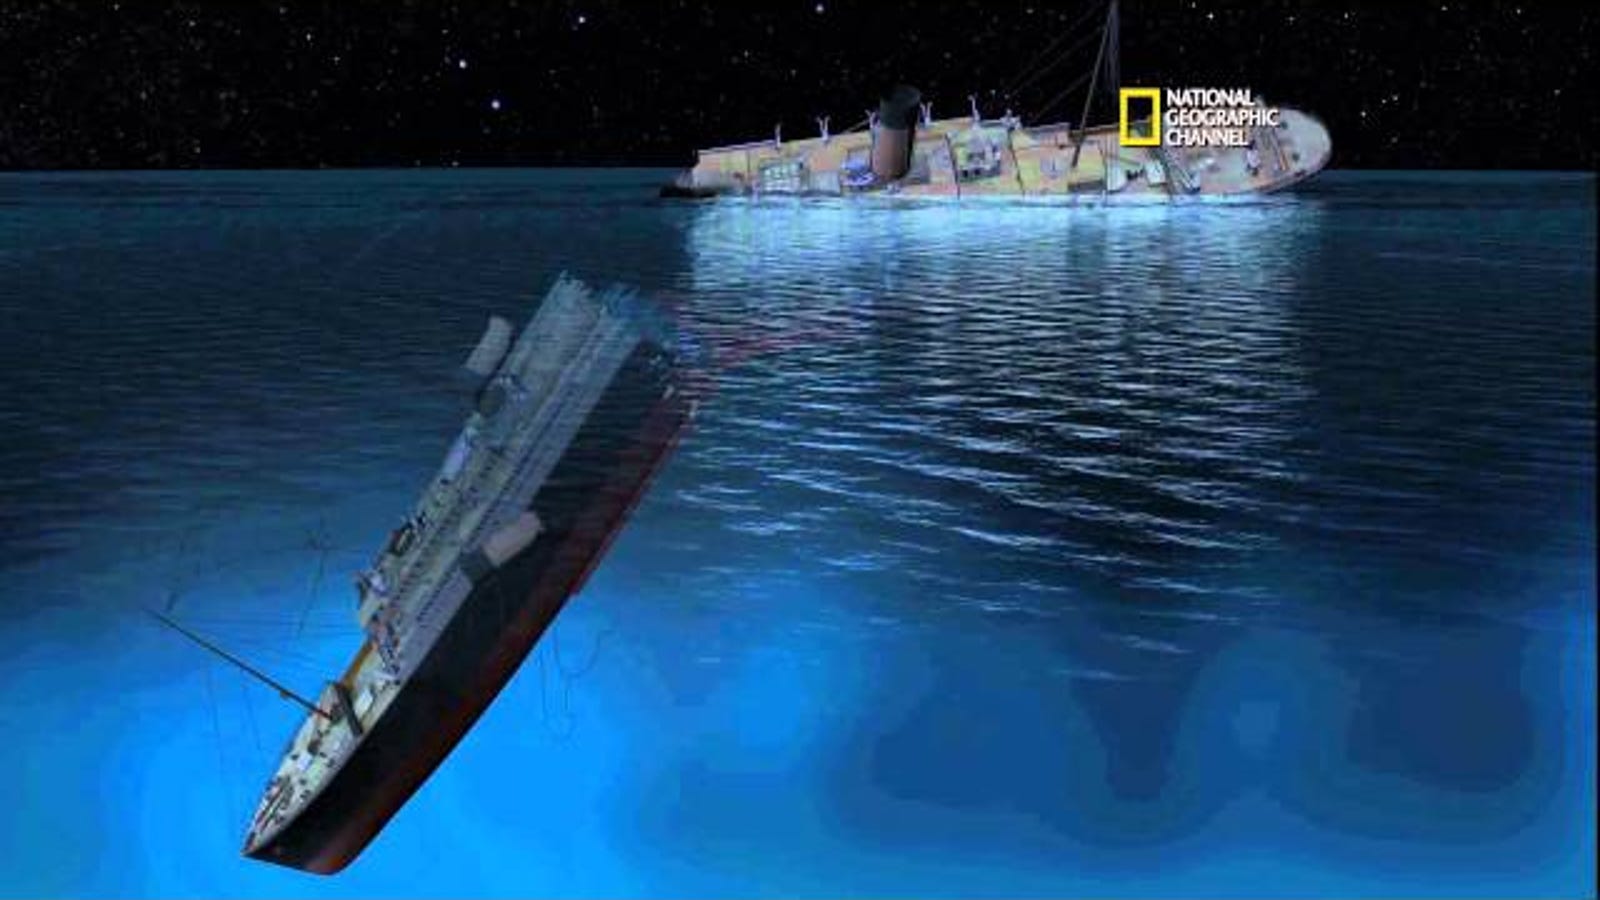 Watch James Cameron's new CGI model of the Titanic sinking